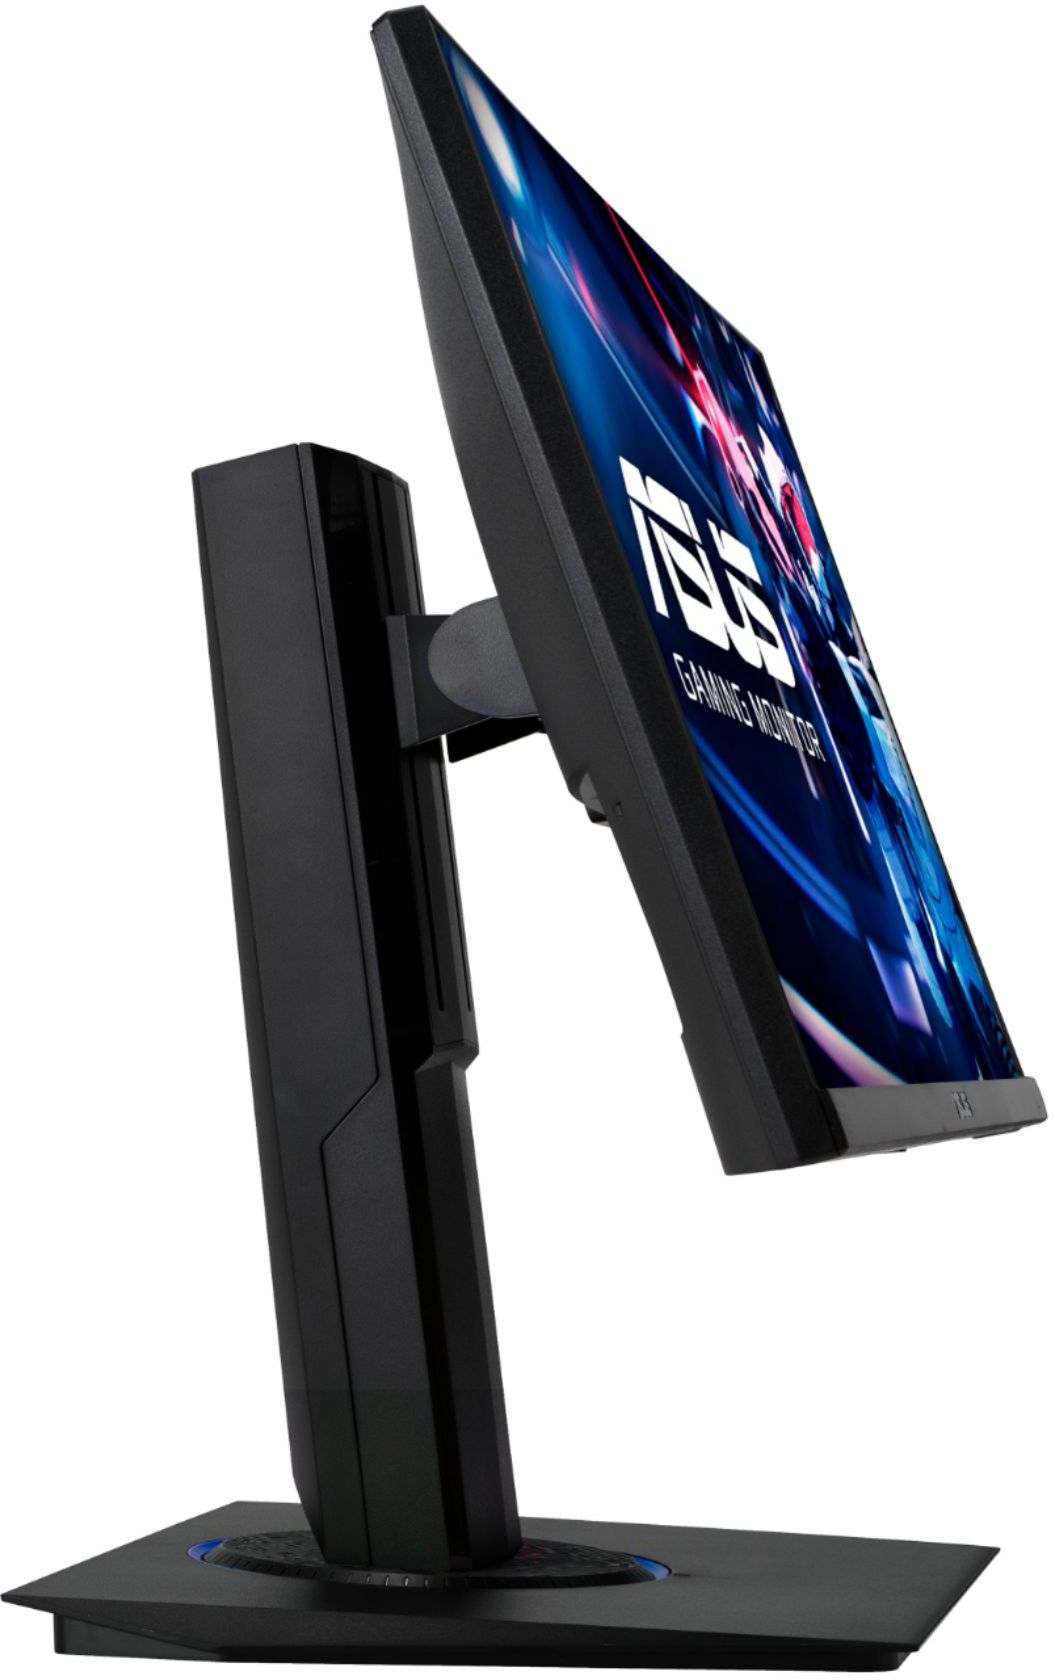 Left View: ASUS - TUF Gaming 27" LCD Widescreen FreeSync Monitor (2 x HDMI, DisplayPort) - Black